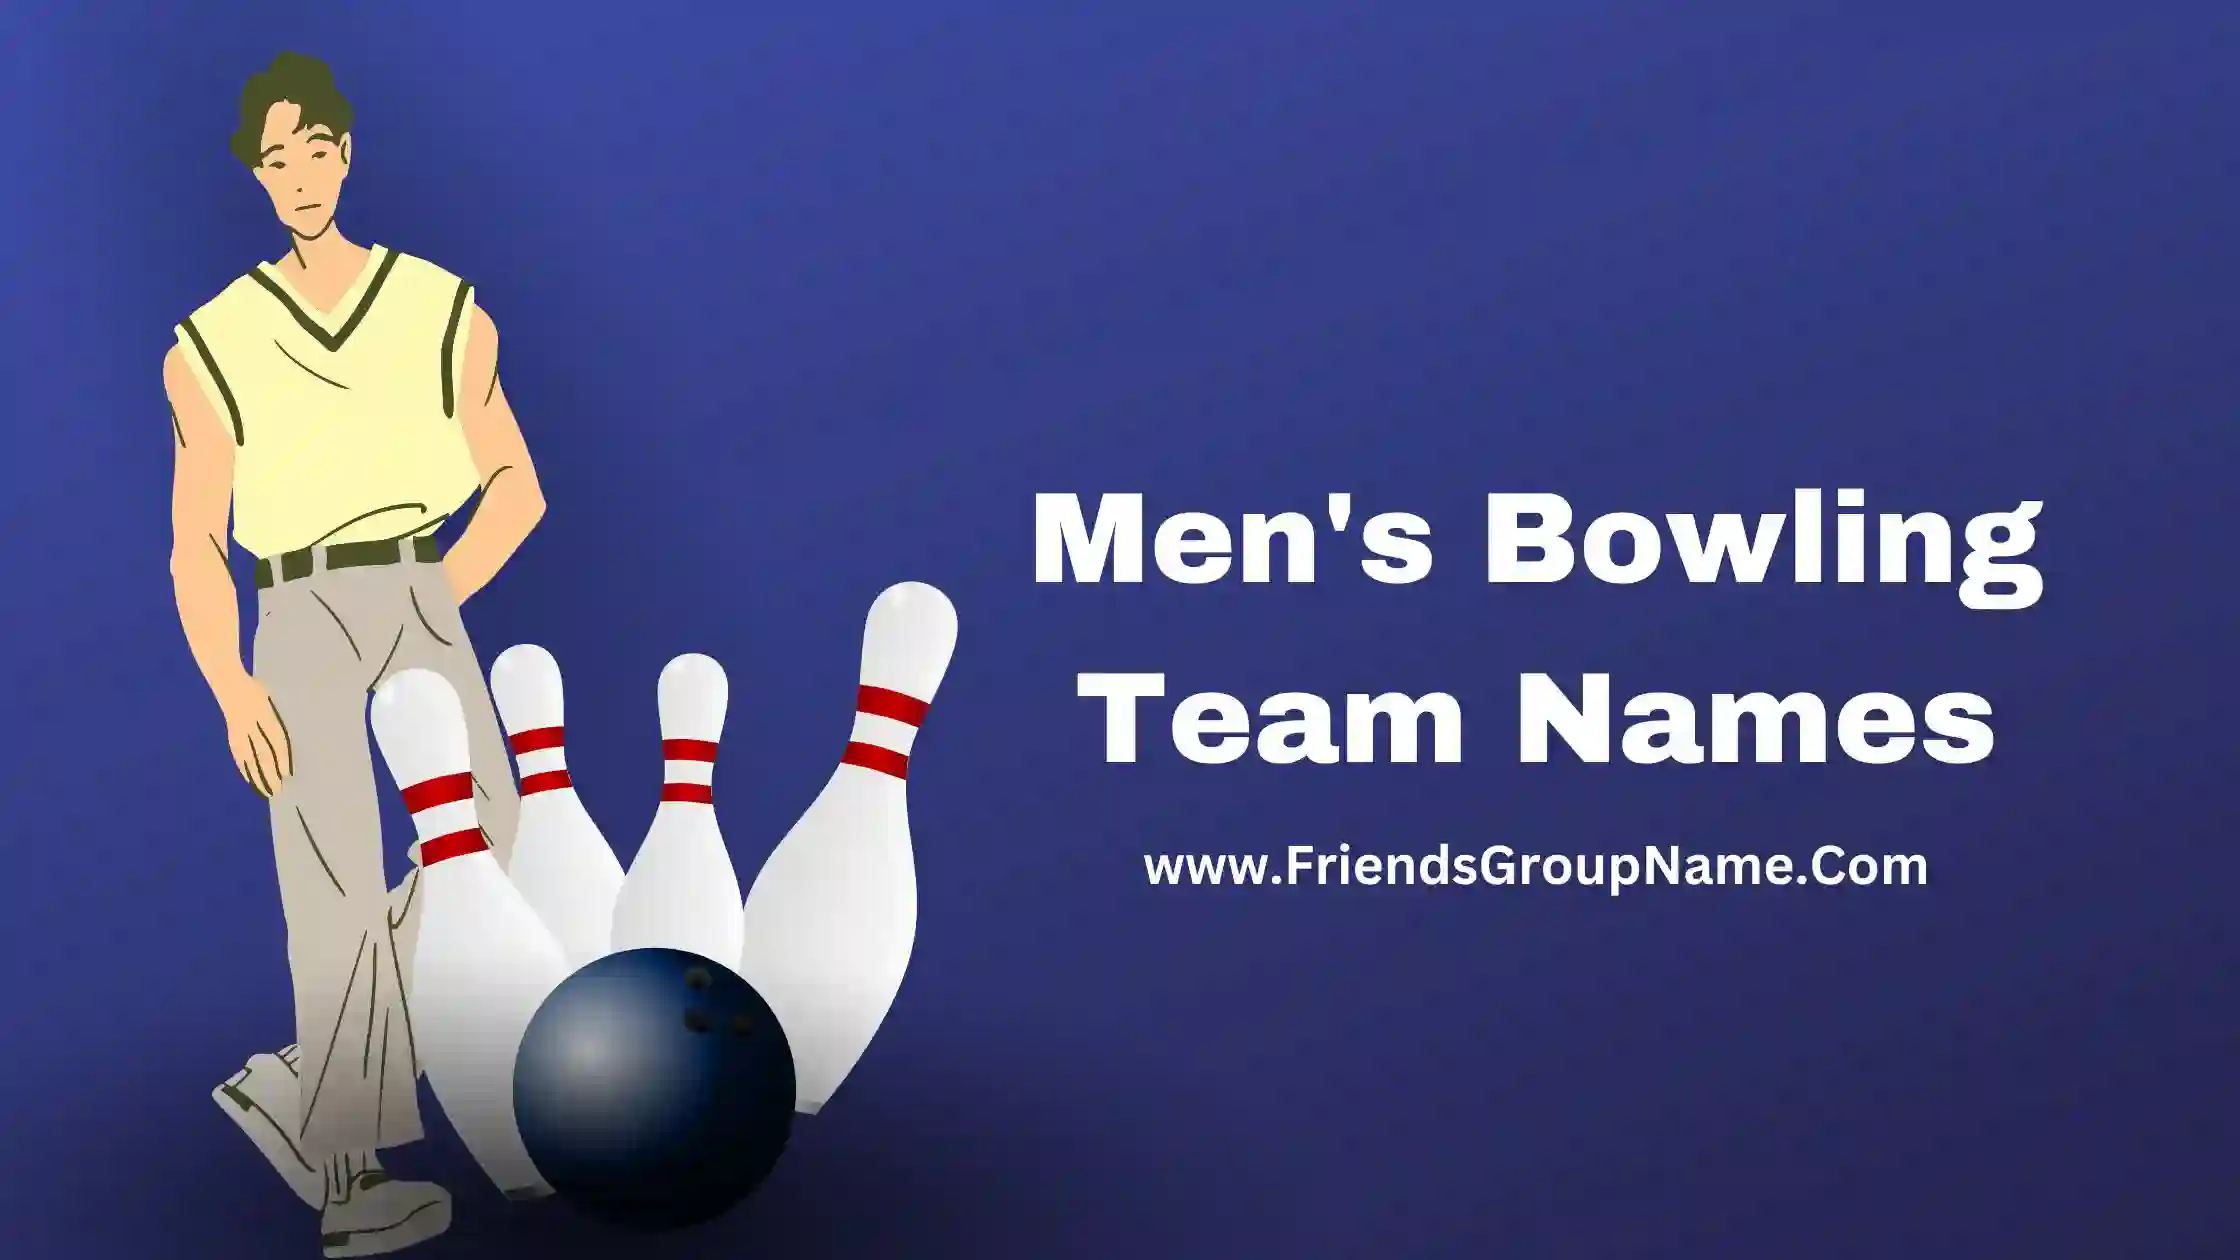 Men's Bowling Team Names